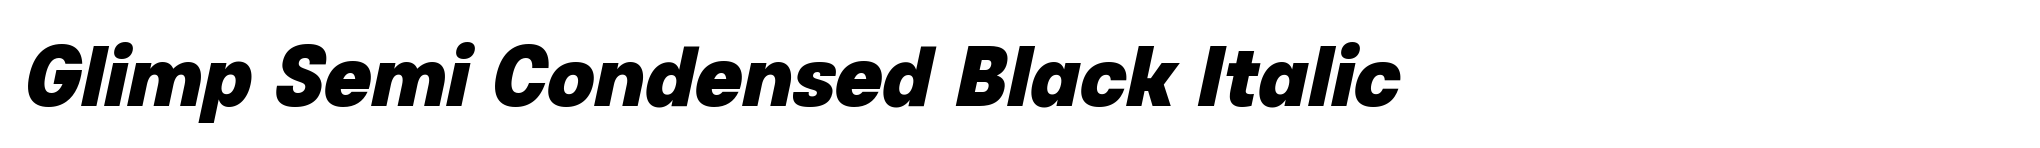 Glimp Semi Condensed Black Italic image